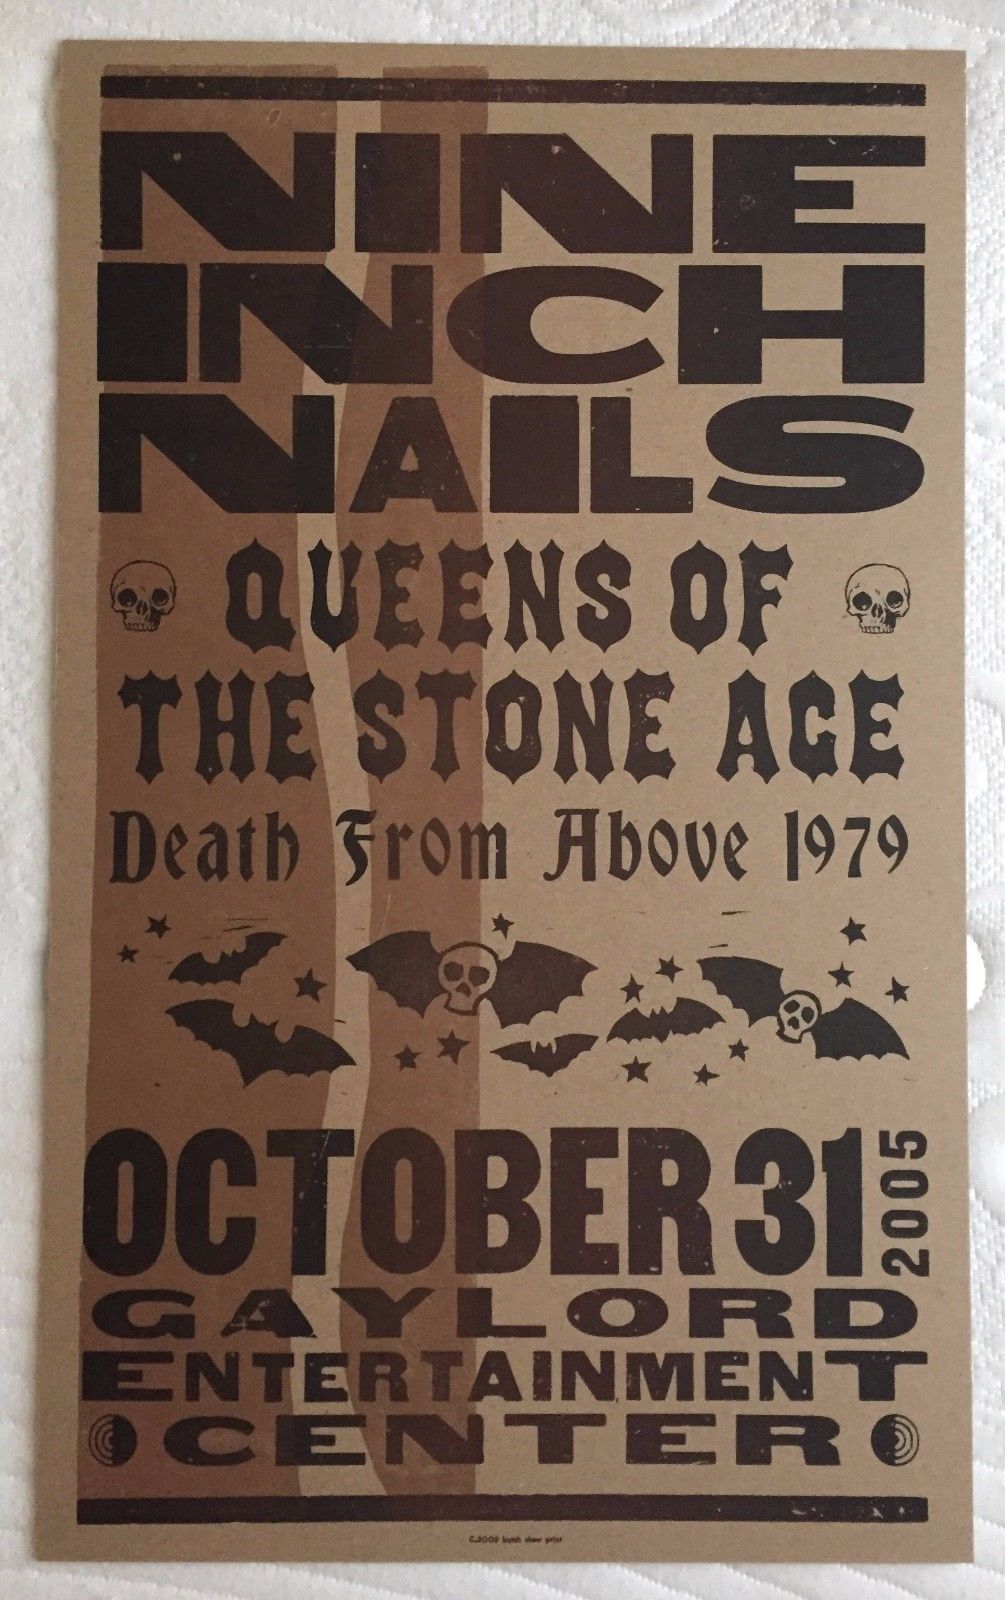 Nashville fall 05 poster